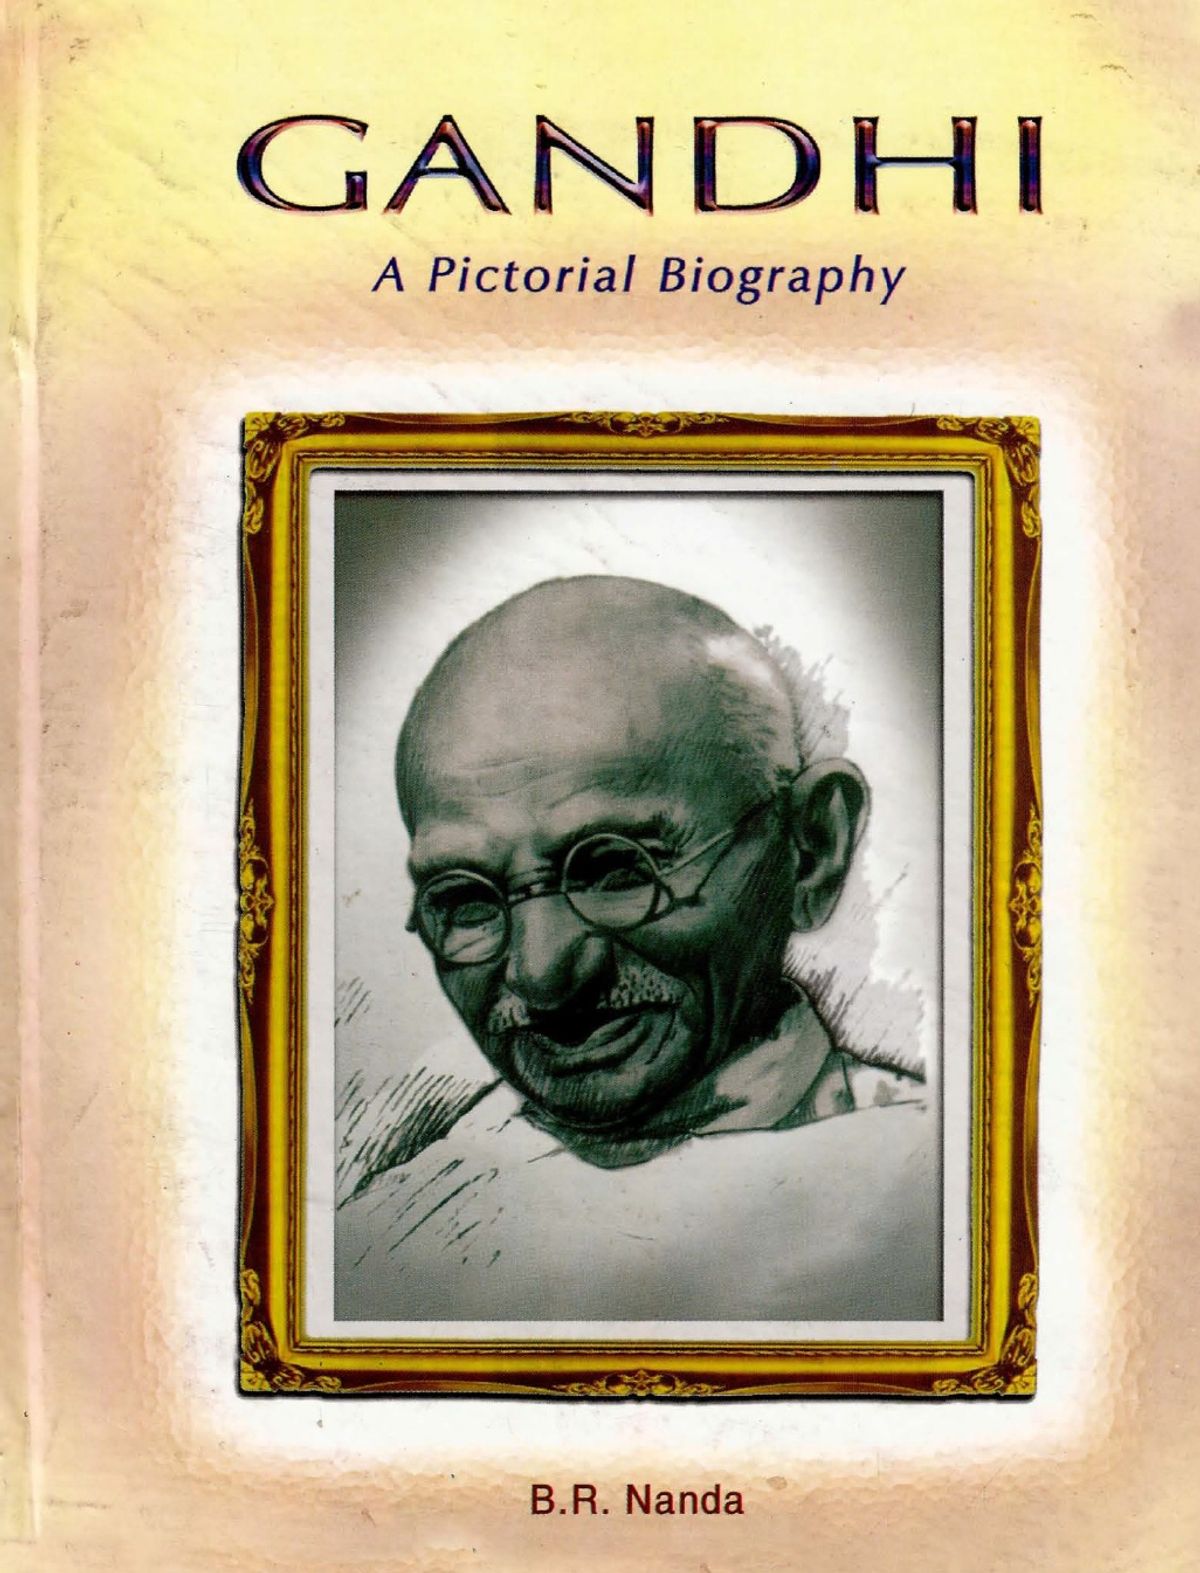 biography in mahatma gandhi